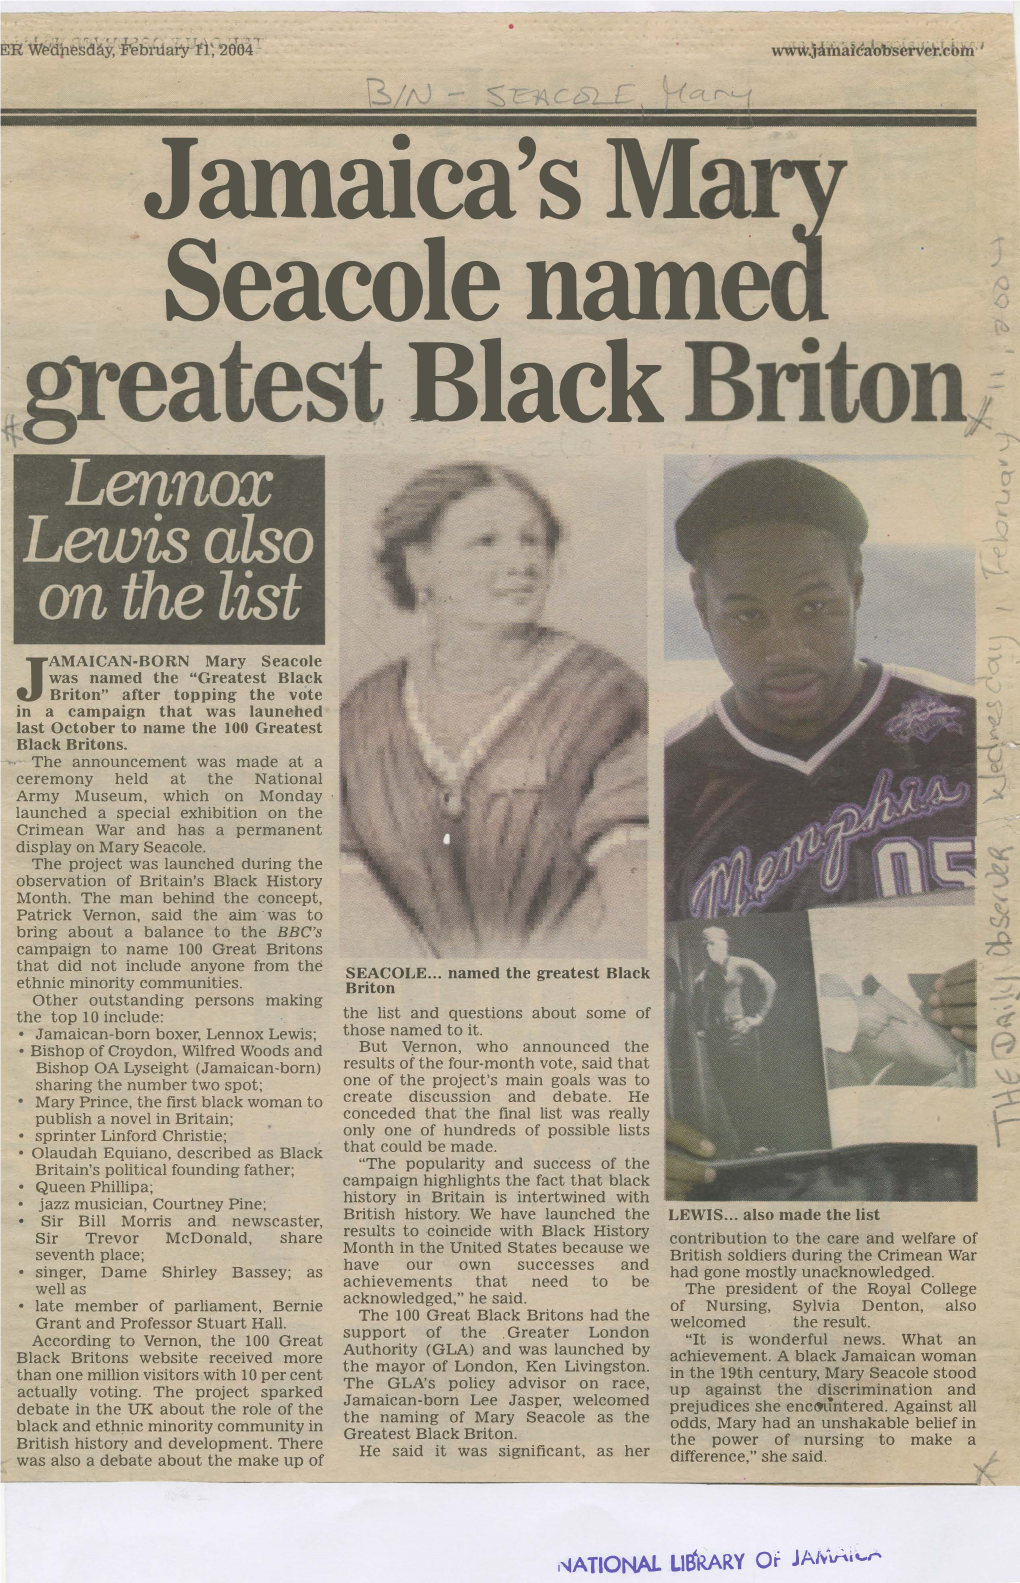 Jamaica's Mary Seacole Named Greatest Black Briton